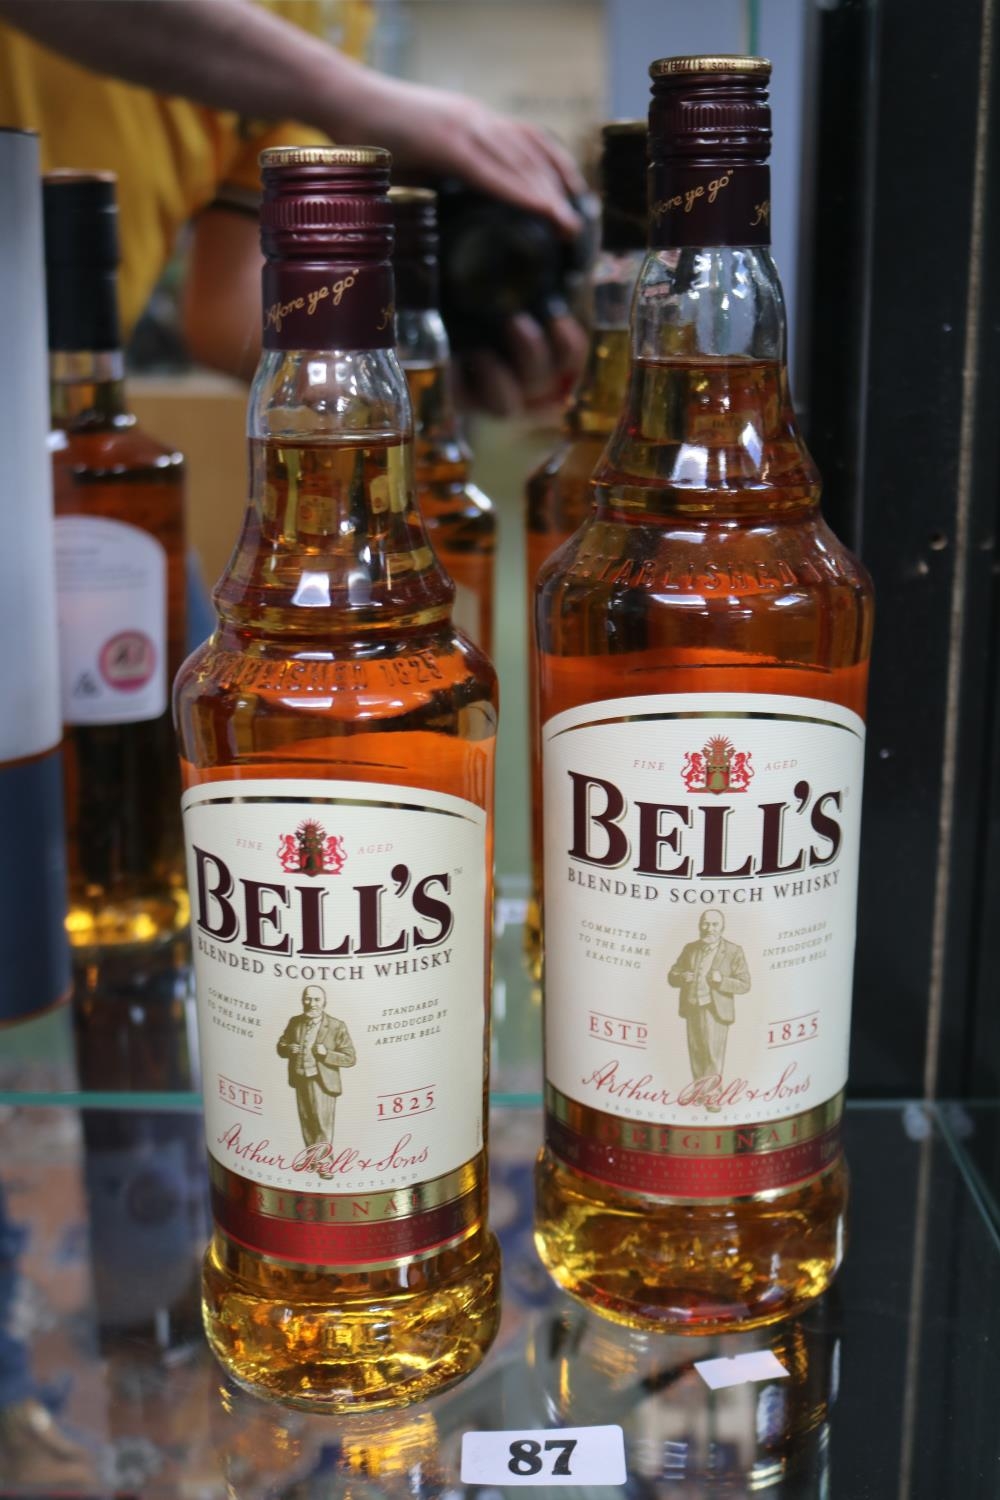 2 Bottles of Bells Blended Scotch Whisky